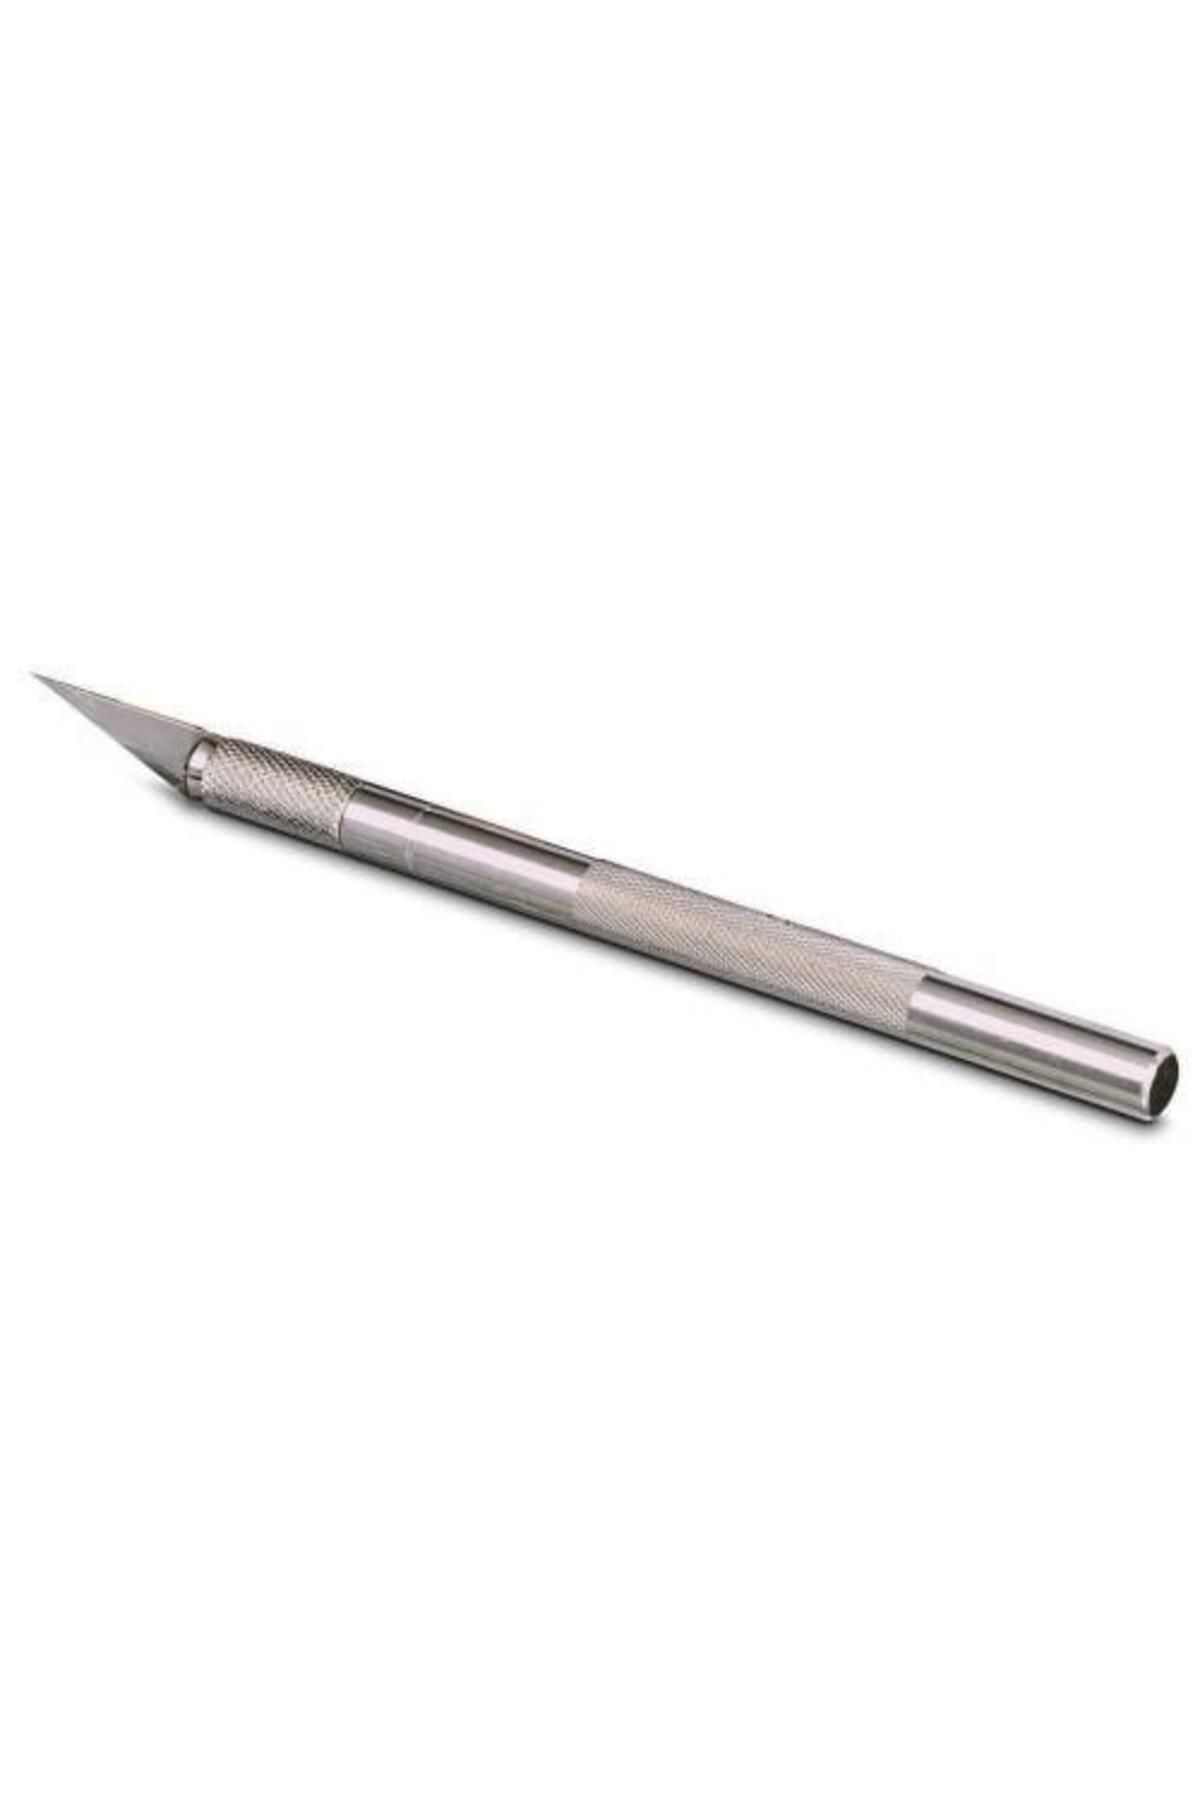 MCEM STORE Stanley ST010401 Hobi Maket Bıçağı 120 mm